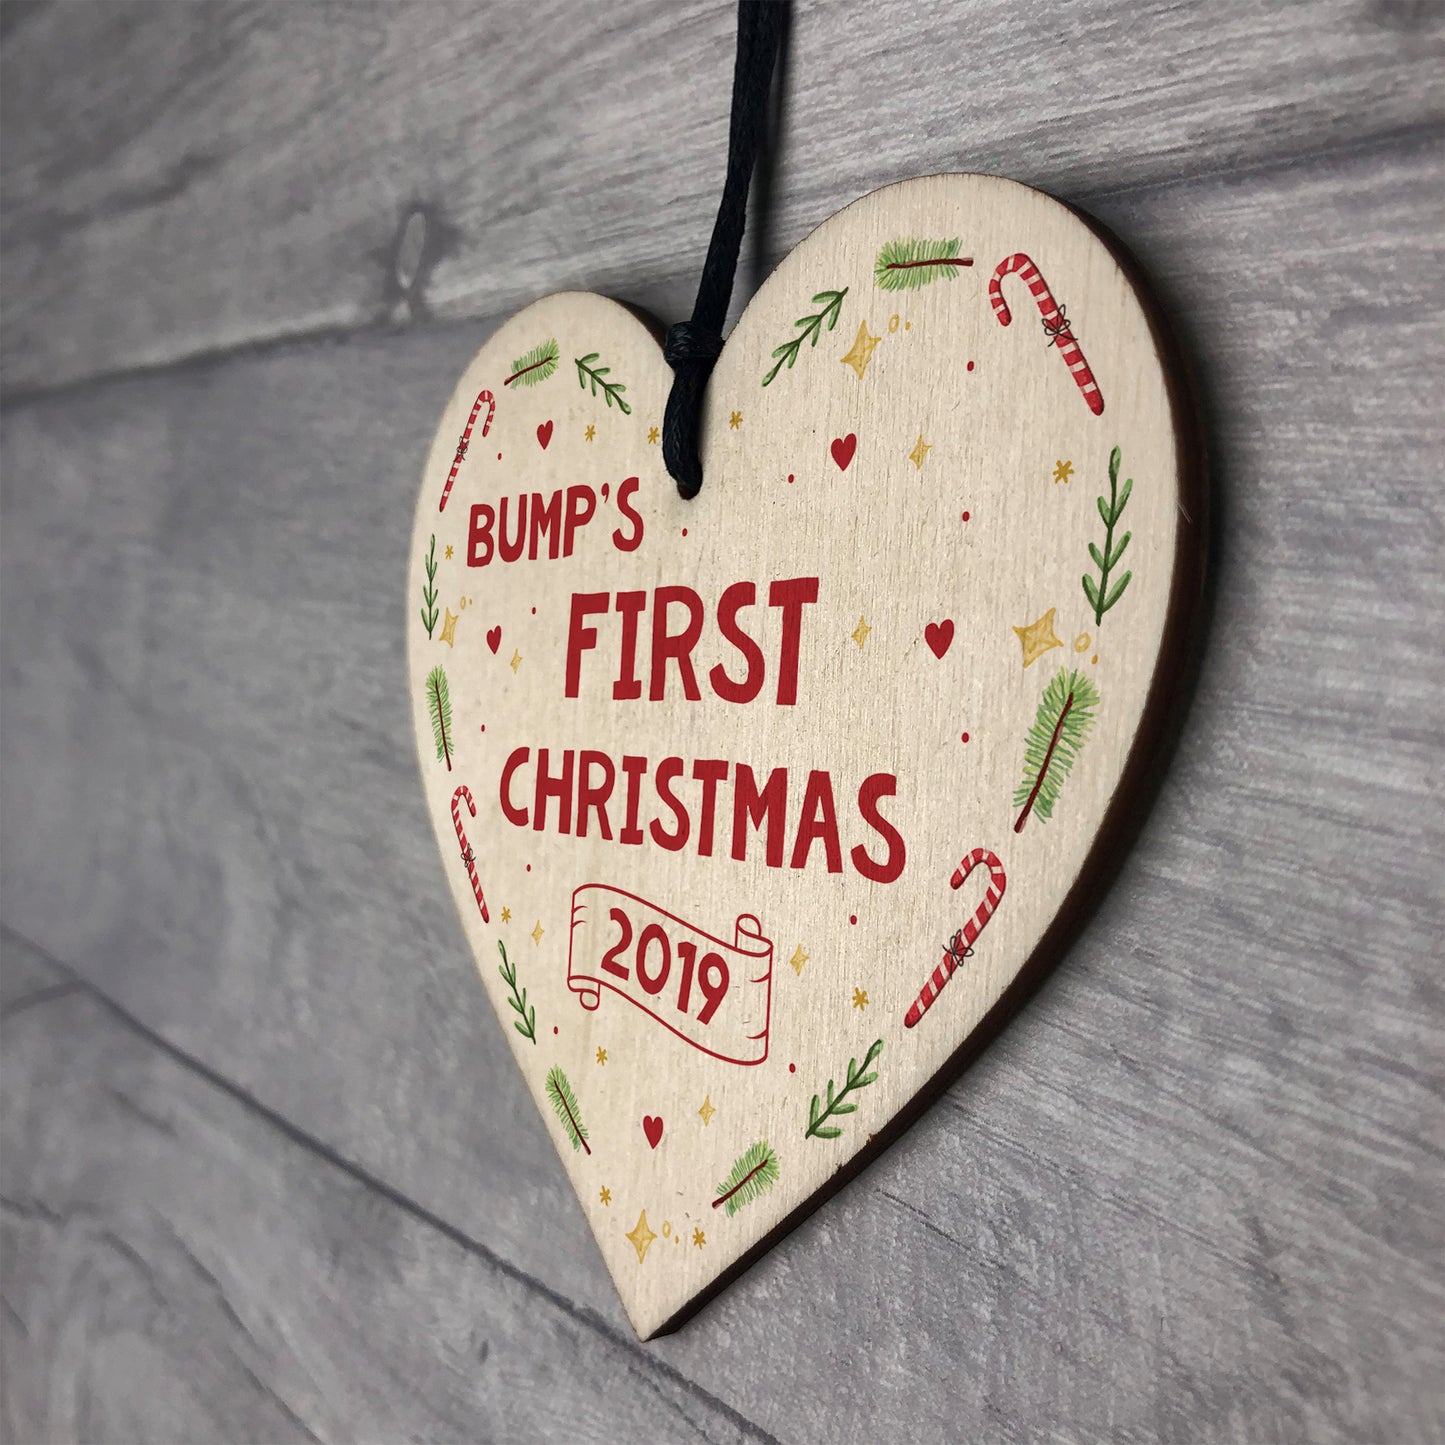 Bumps First Christmas Heart Decoration Wood Christmas Tree Decor